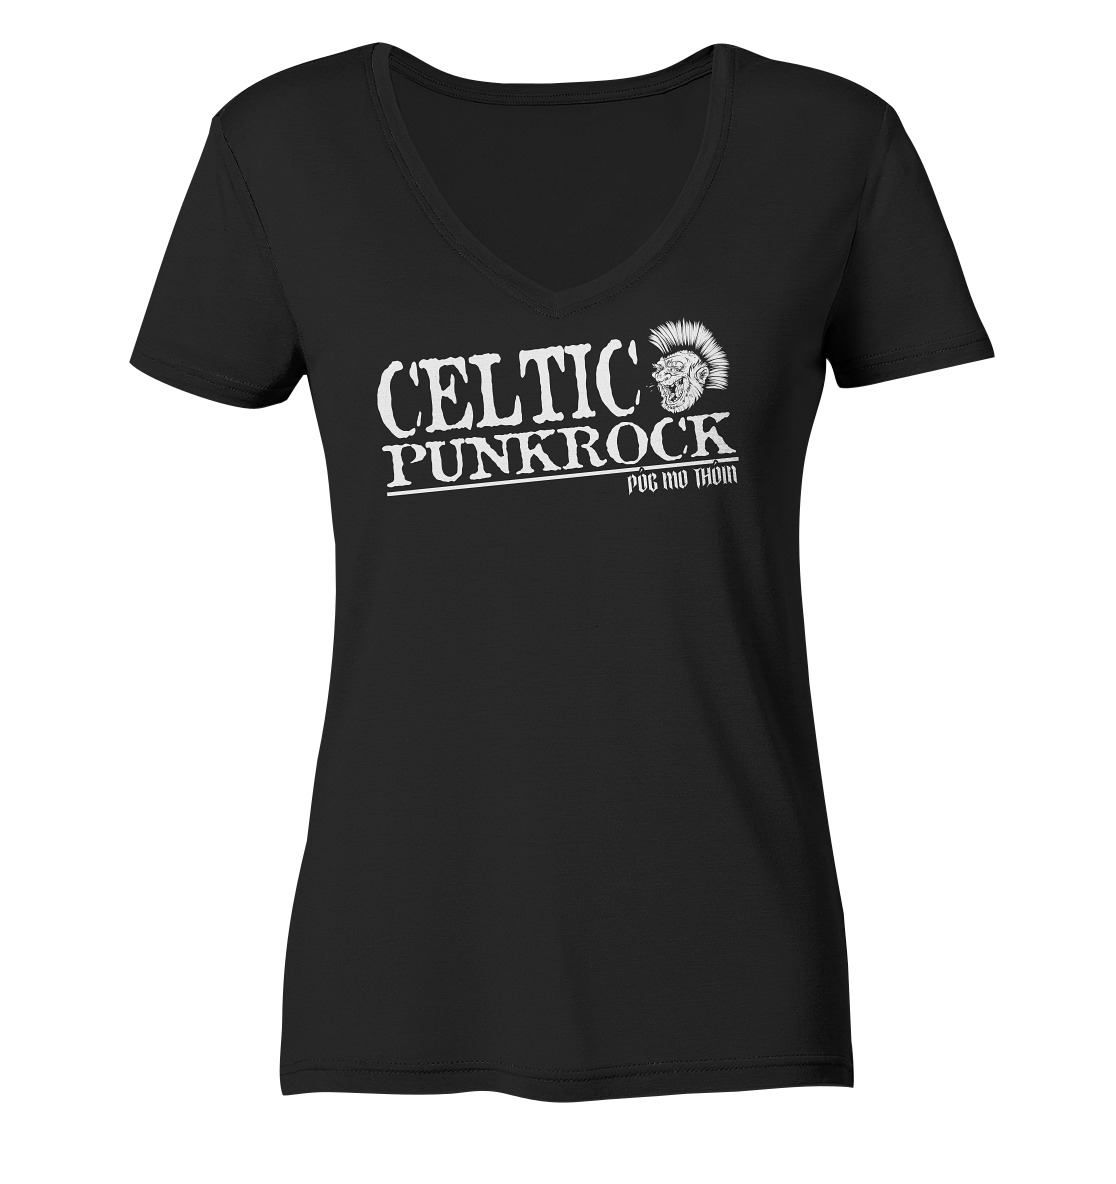 Póg Mo Thóin Streetwear "Celtic Punkrock" - Ladies V-Neck Shirt